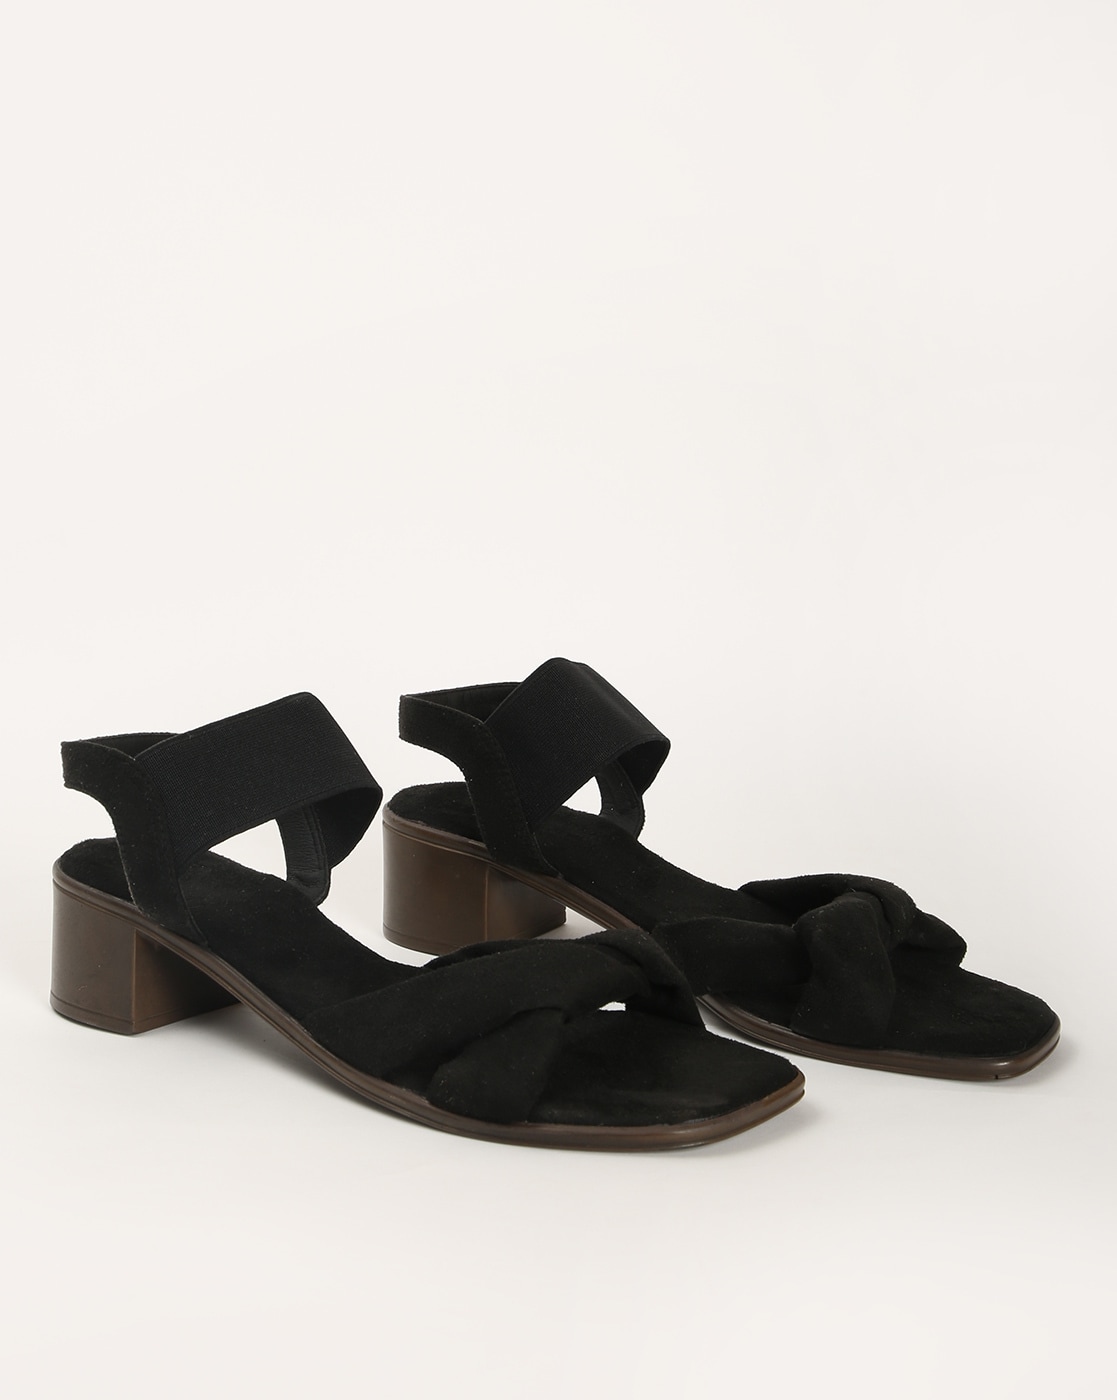 Buy Black Heeled Sandals for Women by Inc.5 Online | Ajio.com